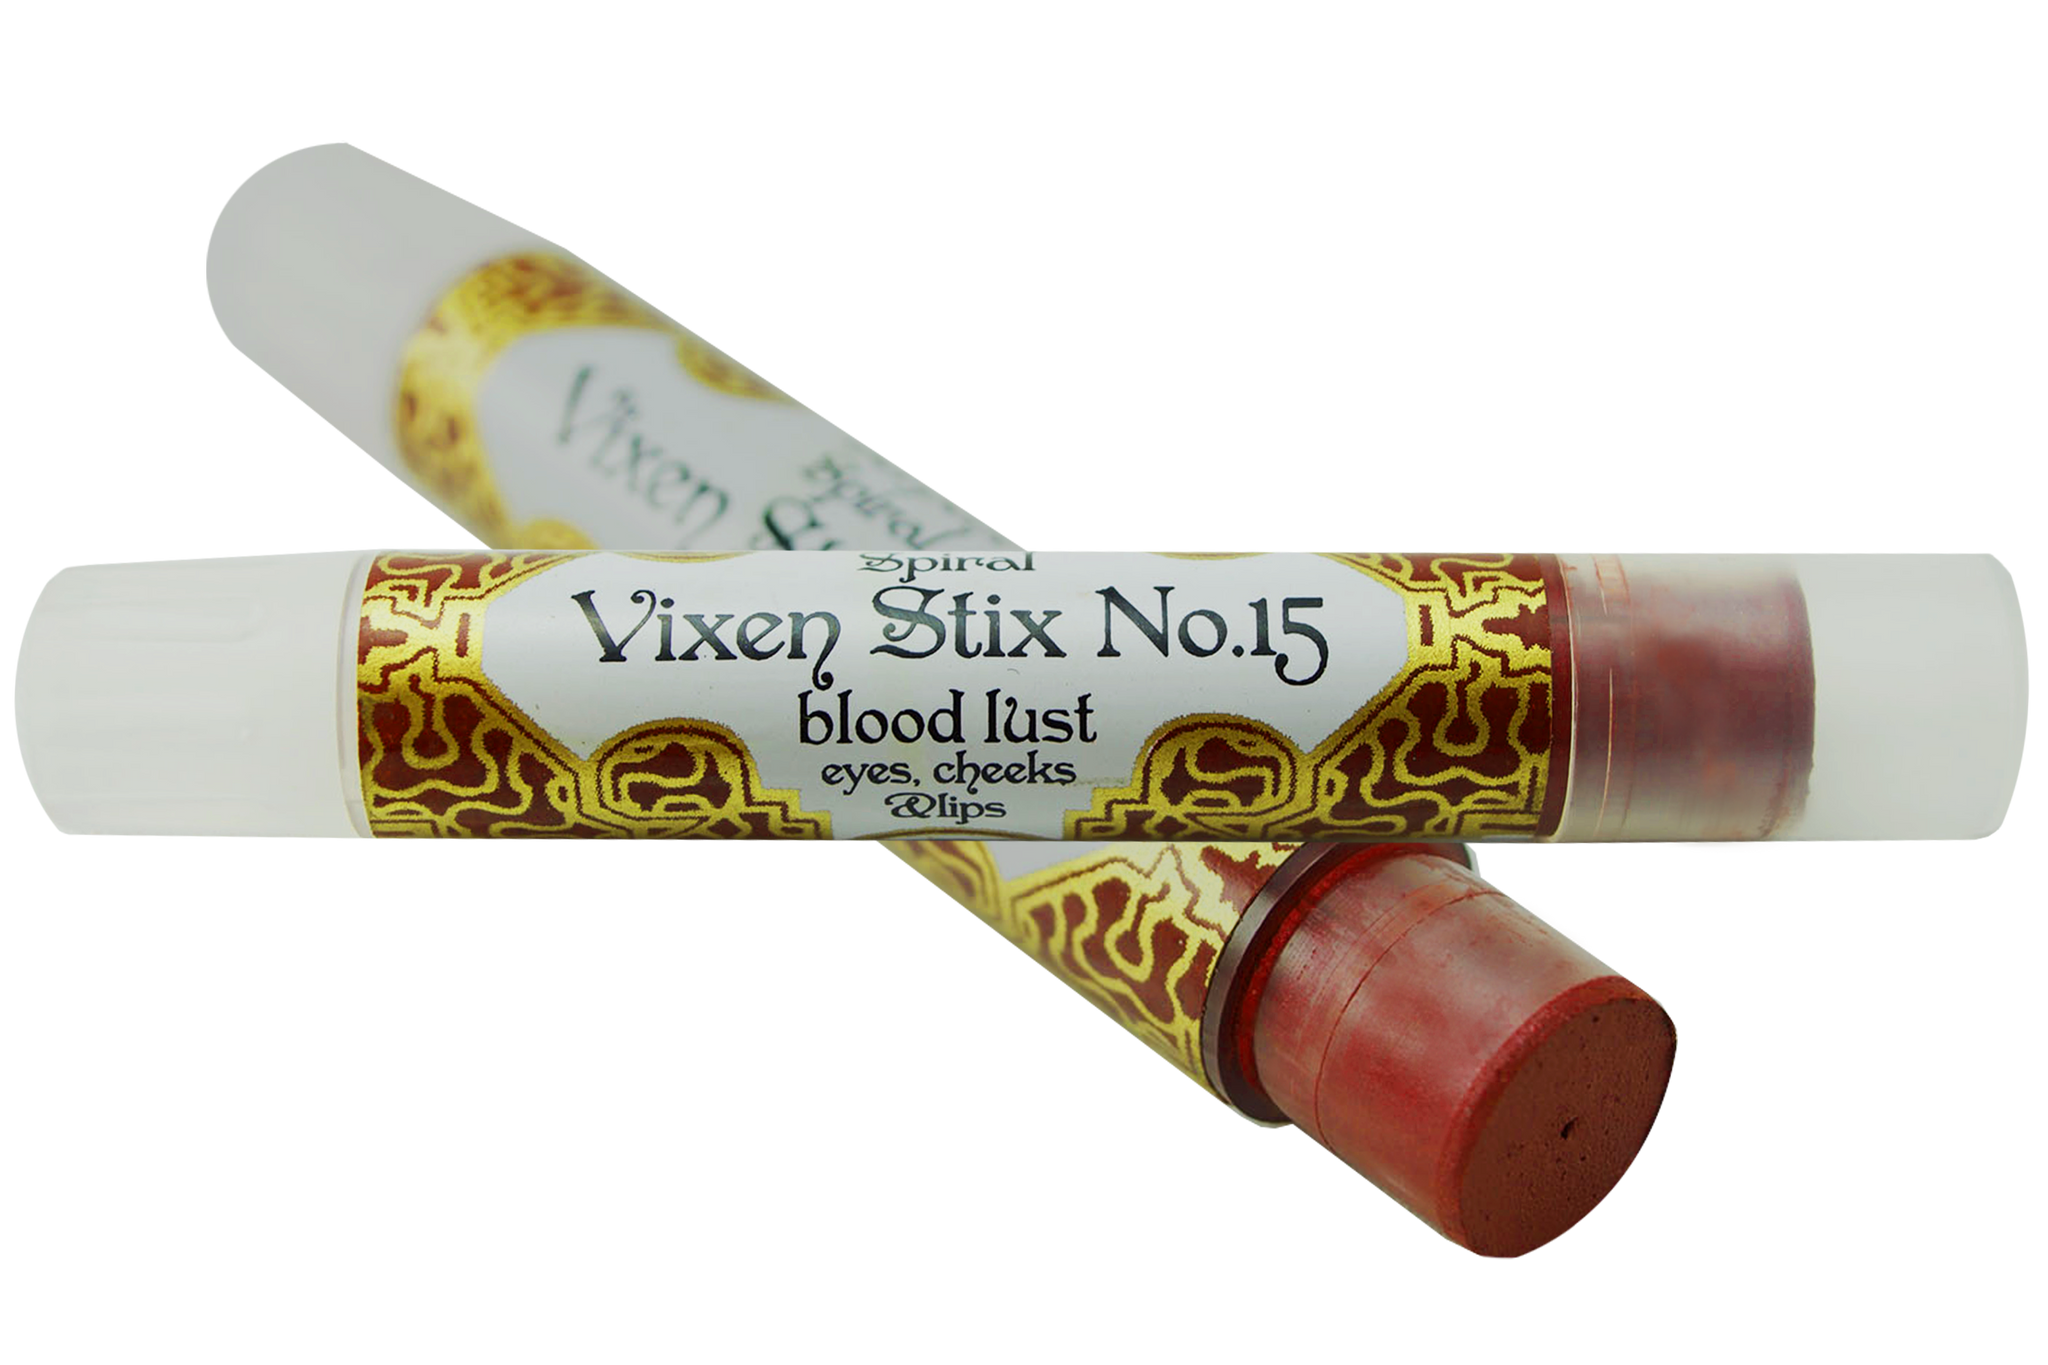 Vixen Stix No.15 ~ blood lust organic lip stick